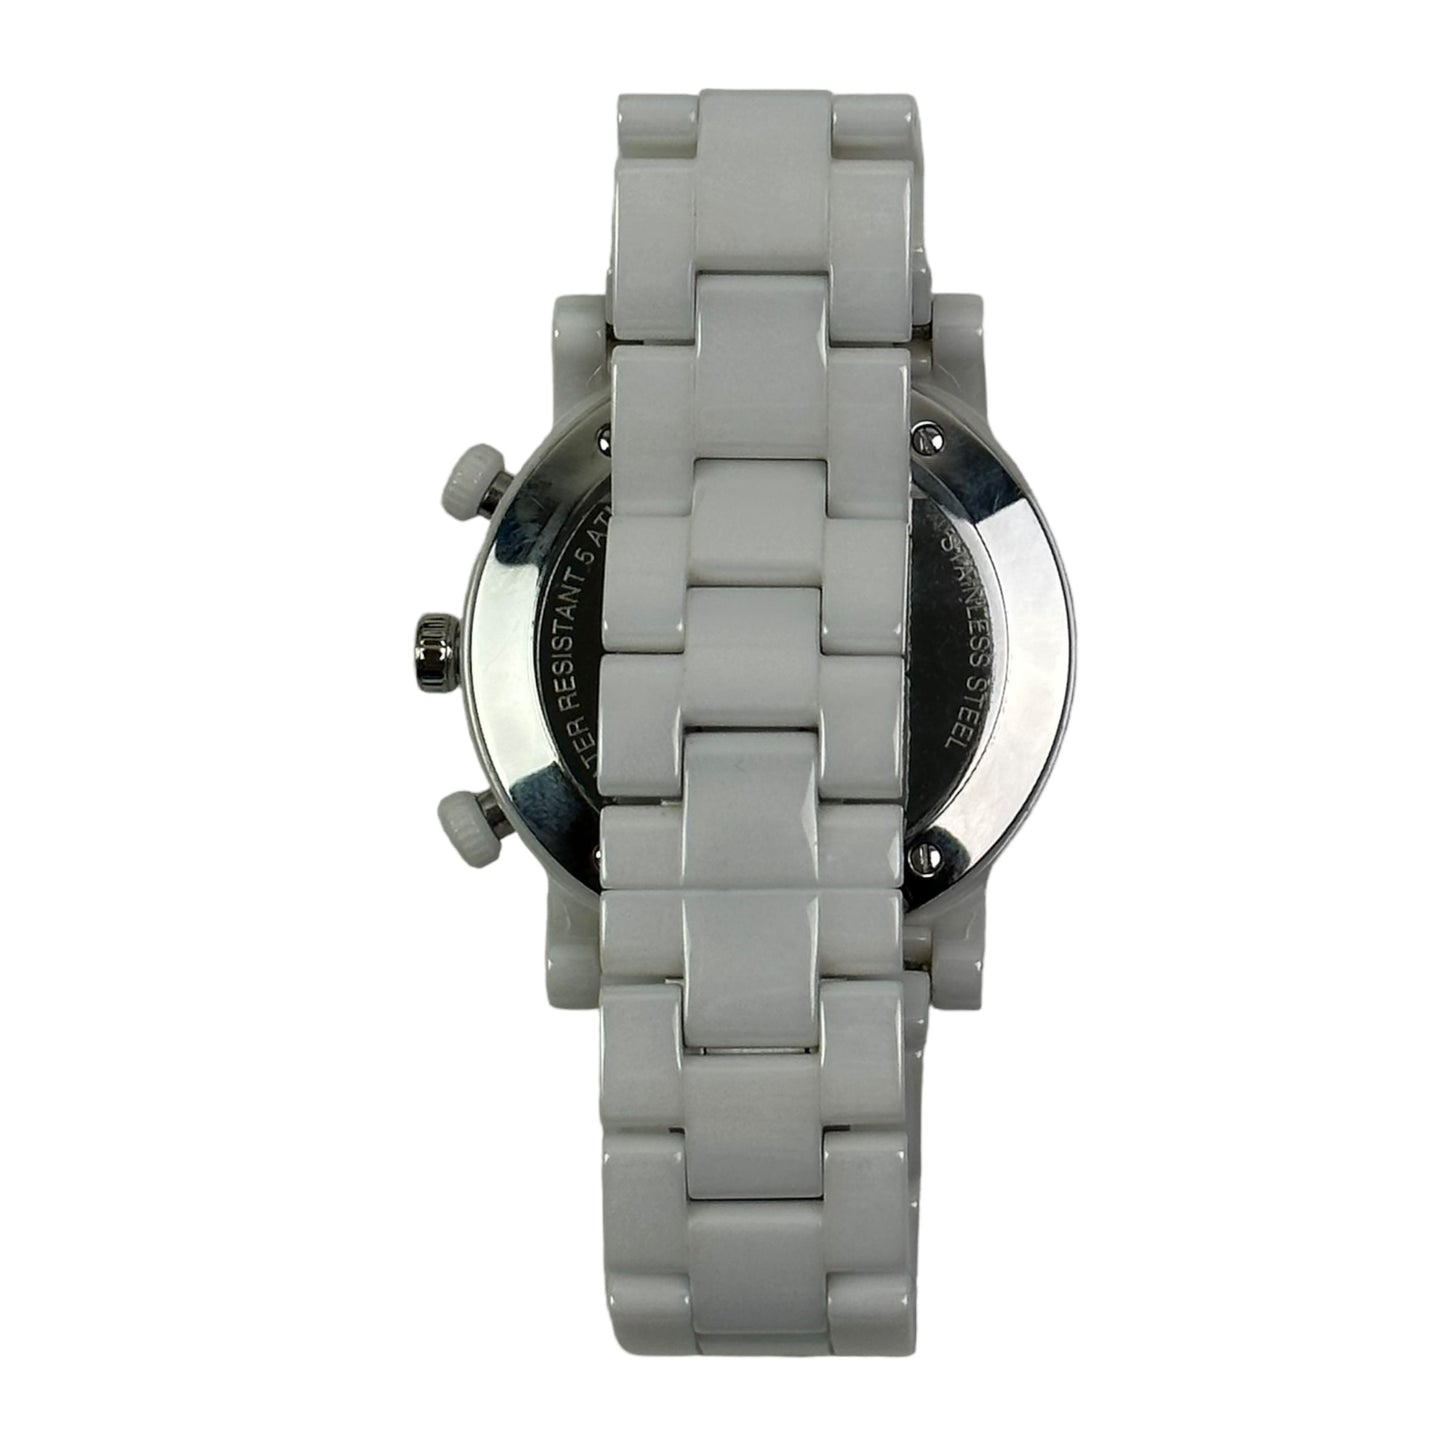 Gucci Ceramic G-Chrono Quartz Watch